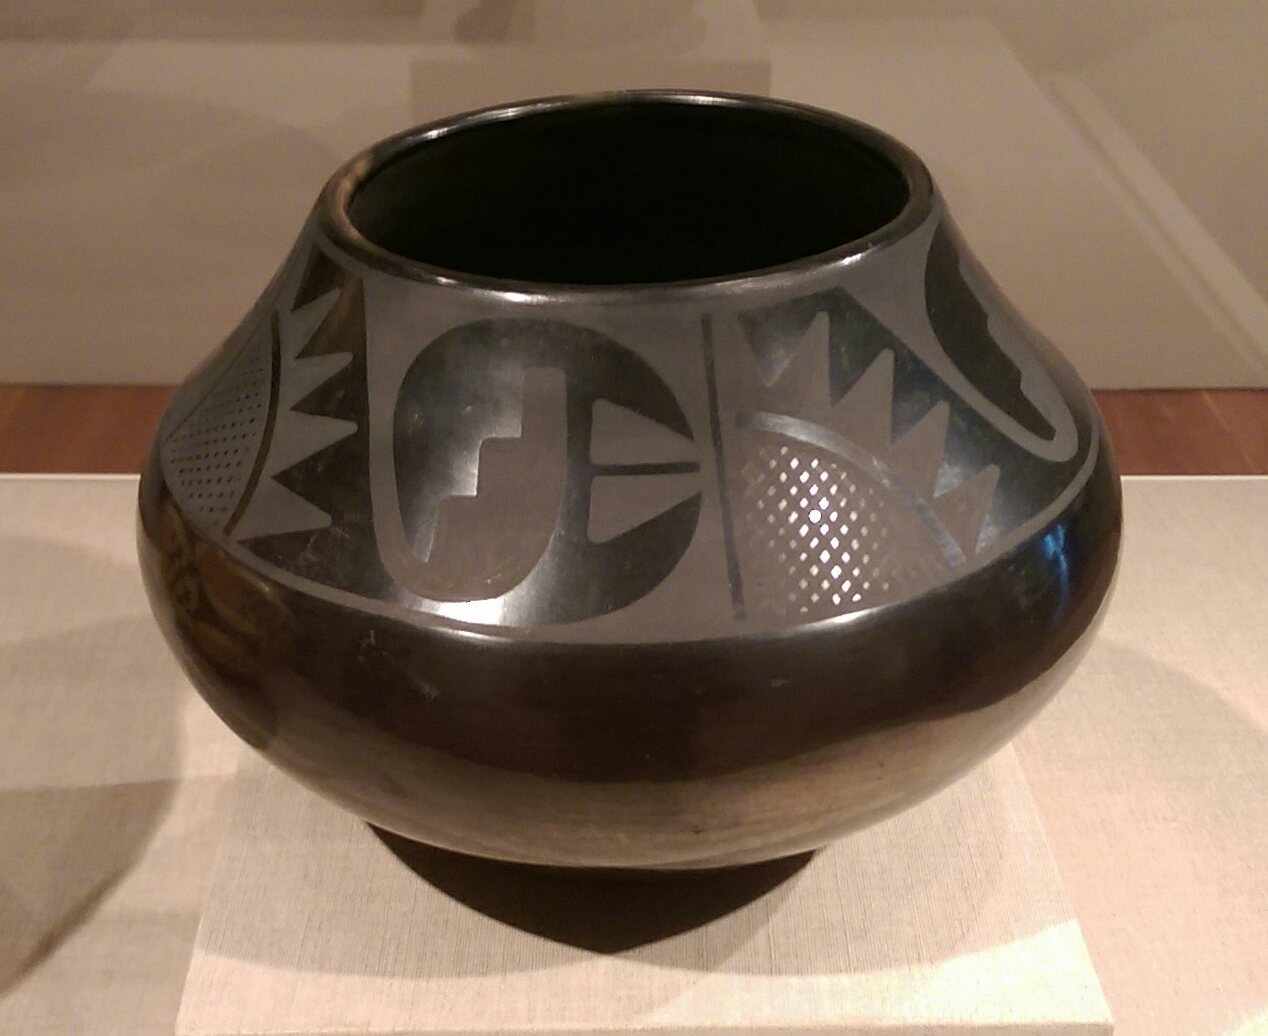 Ceramic polychrome jar with hand-painted geometric design / Maria Martinez  - Gilcrease Museum